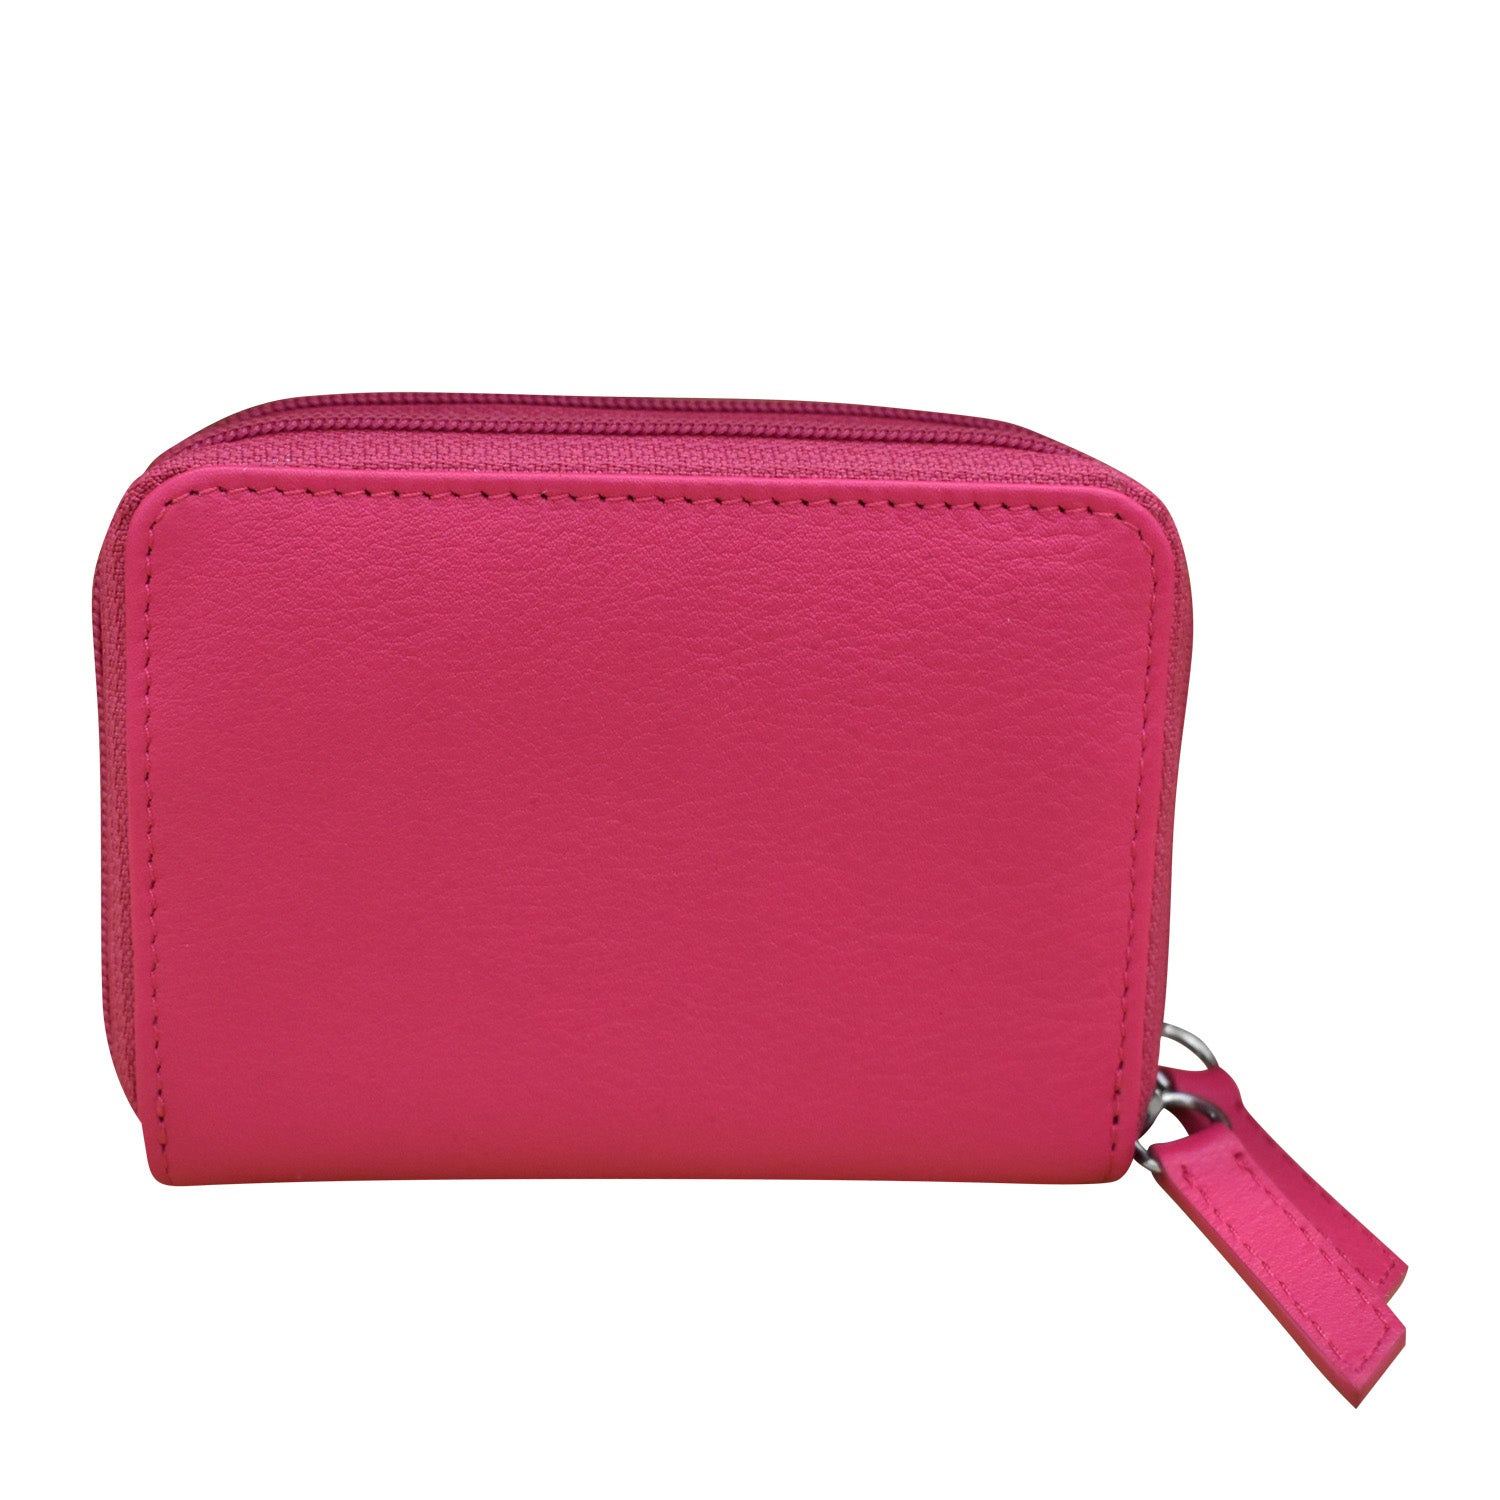 Buy Valerie Women Wallets Long Double Zipper Wallet Girls Large Leather  Purse Card Organizer (Beige) at Amazon.in